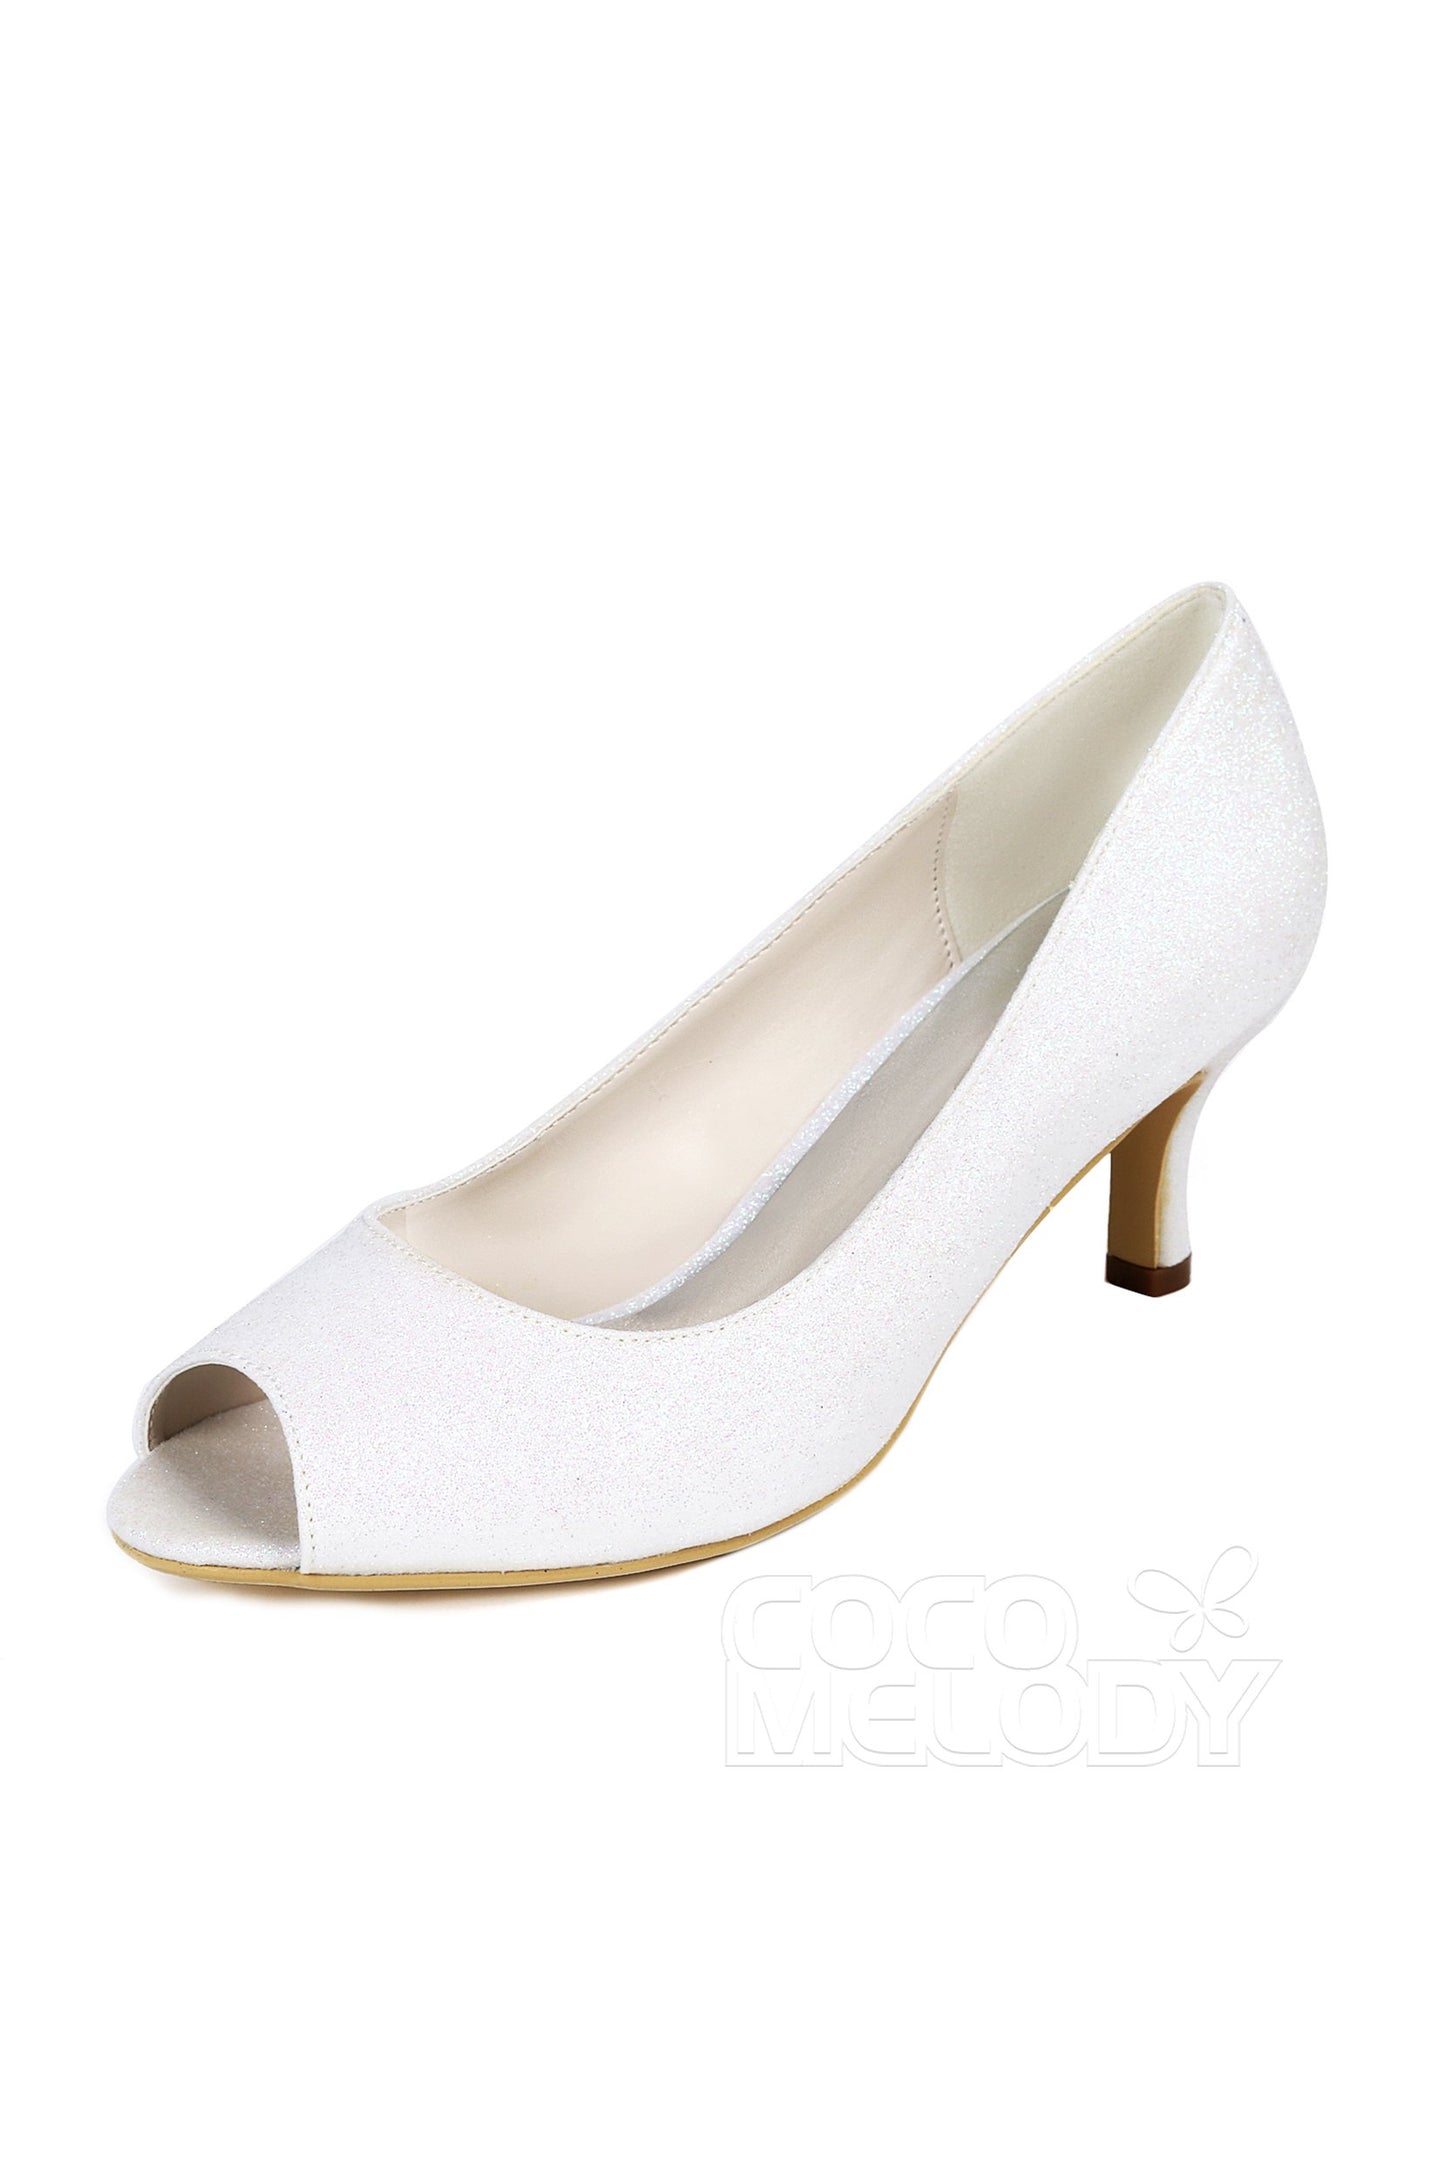 Low Heel Sparkling Peep Toe Bridal Shoes CK0069